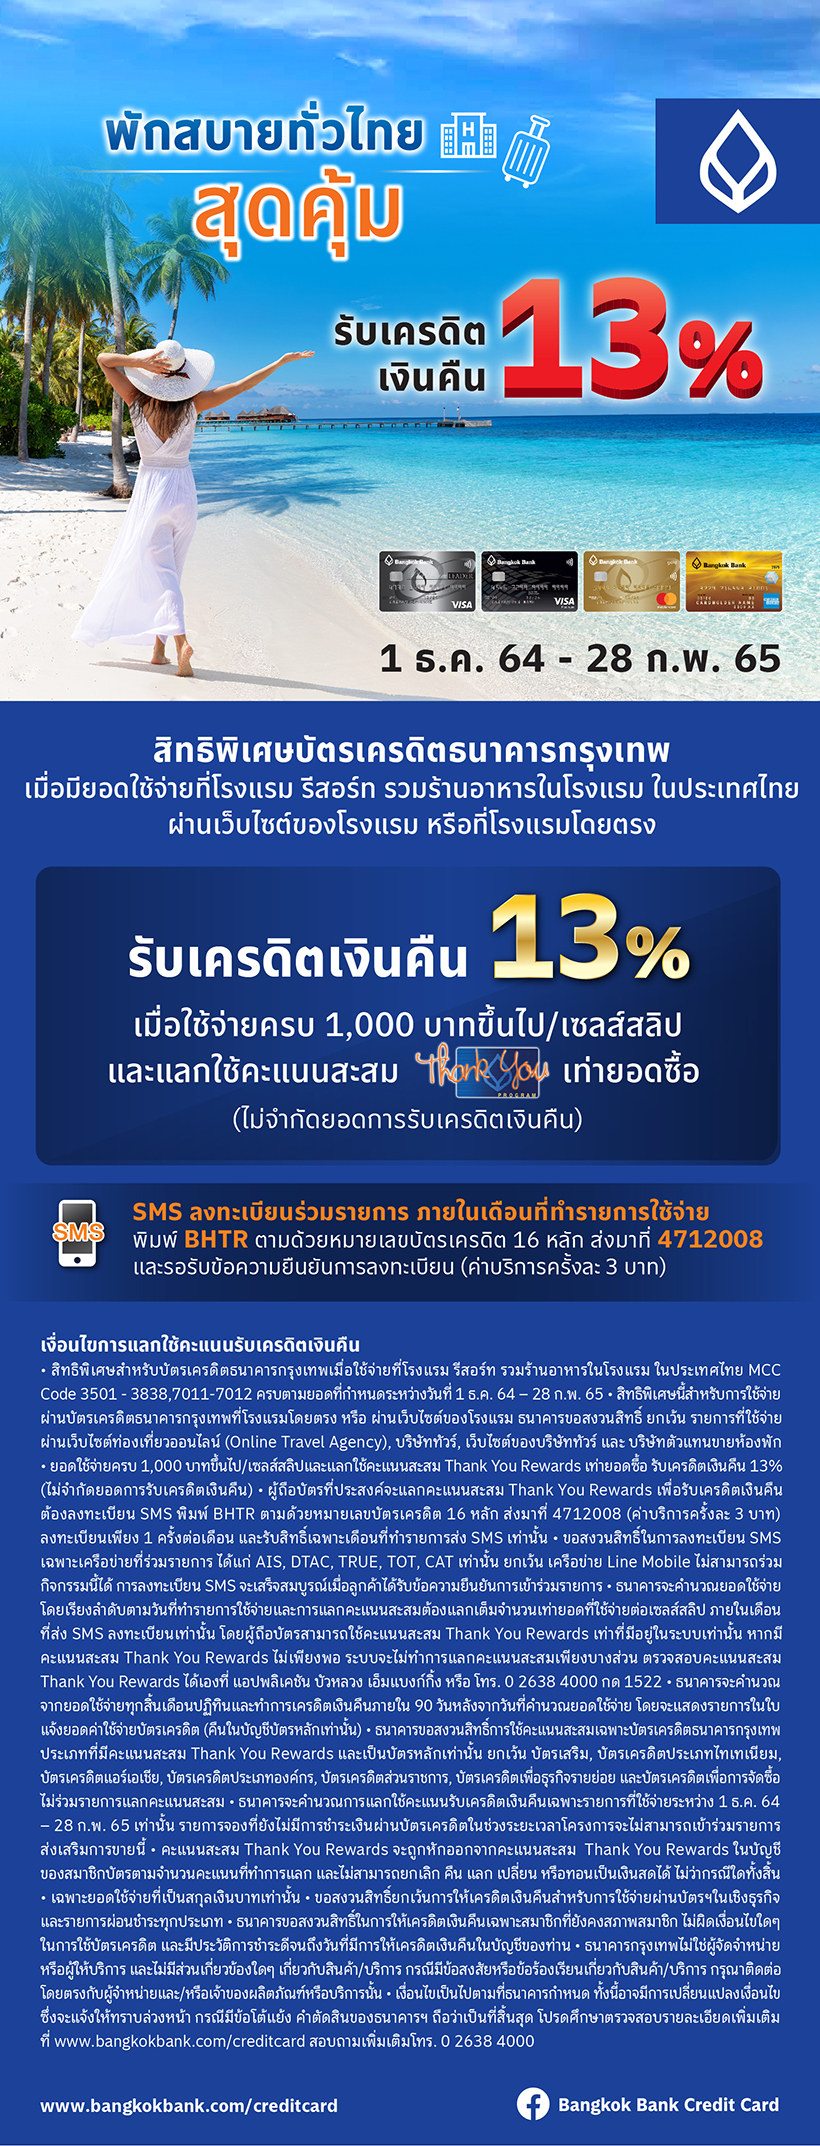 Bangkok Bank : พักสบายทั่วไทยสุดคุ้ม รับเครดิตเงินคืน 13%